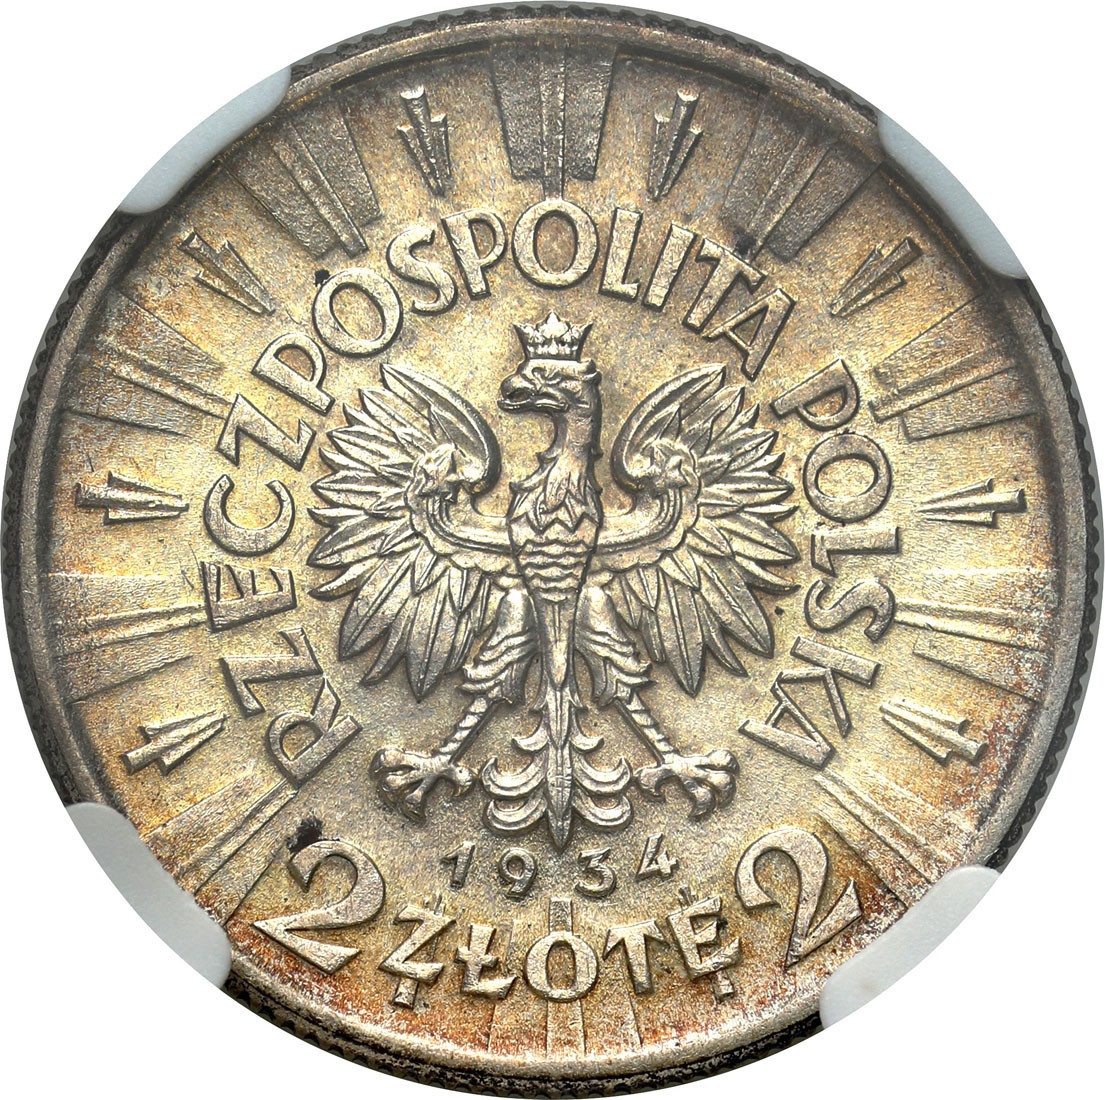 II RP. 2 złote 1934 Piłsudski NGC MS62 - PIĘKNE